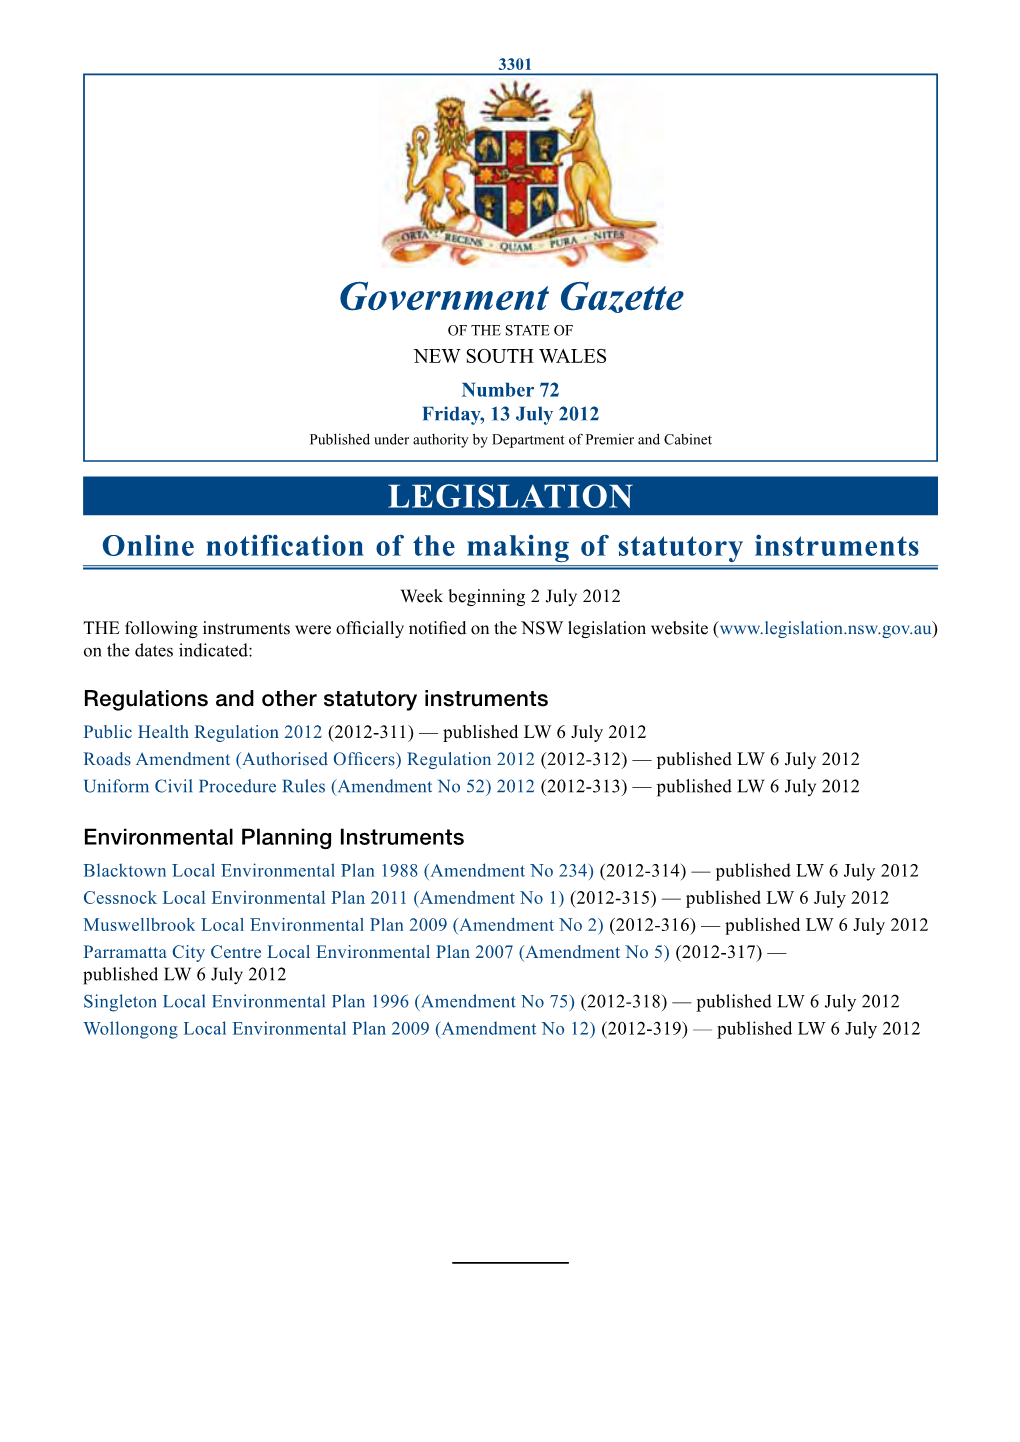 Government Gazette No. 28 of 13 July 2012